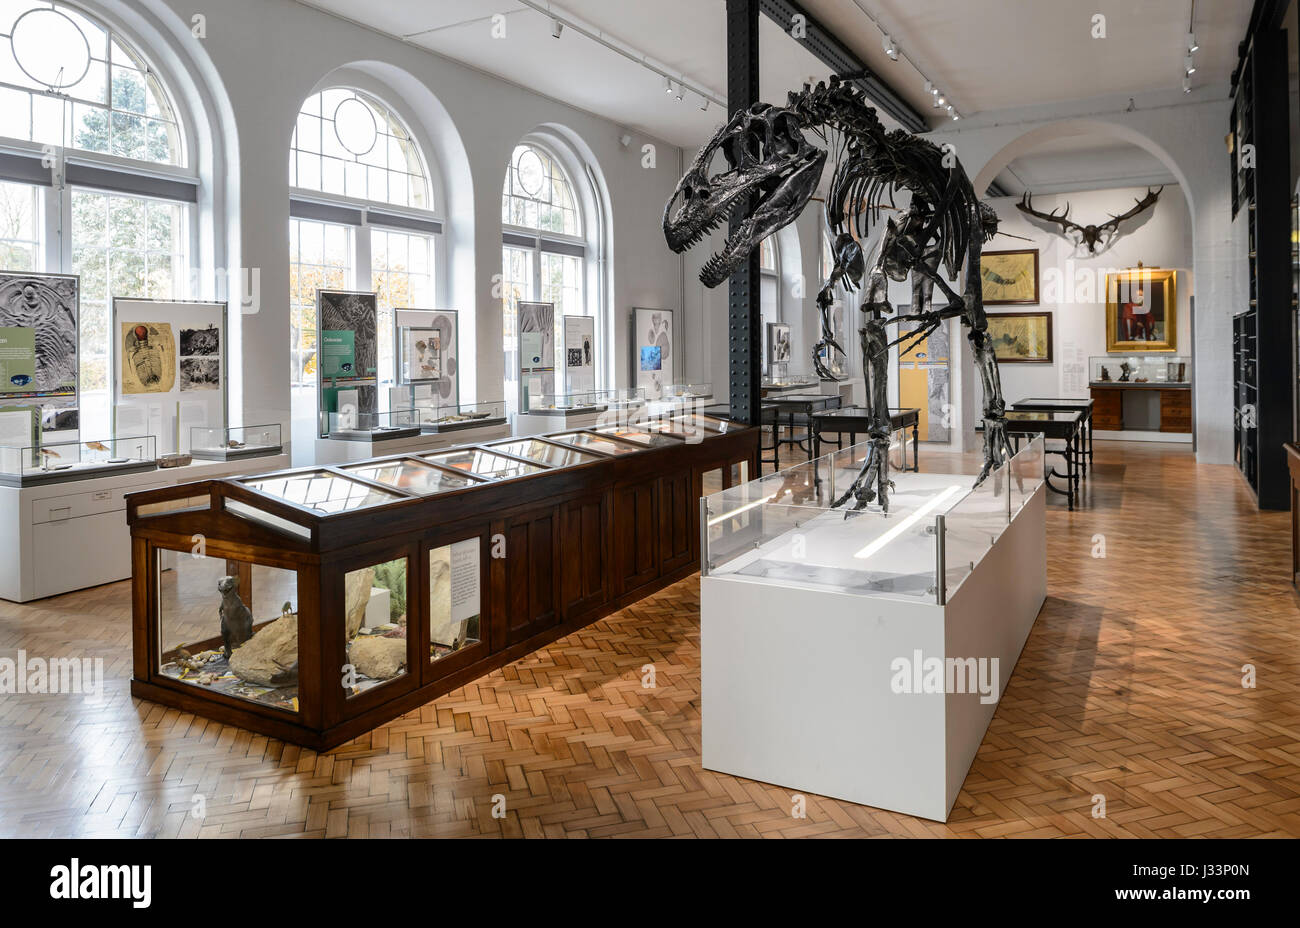 Das lapworth museum -Fotos und -Bildmaterial in hoher Auflösung – Alamy